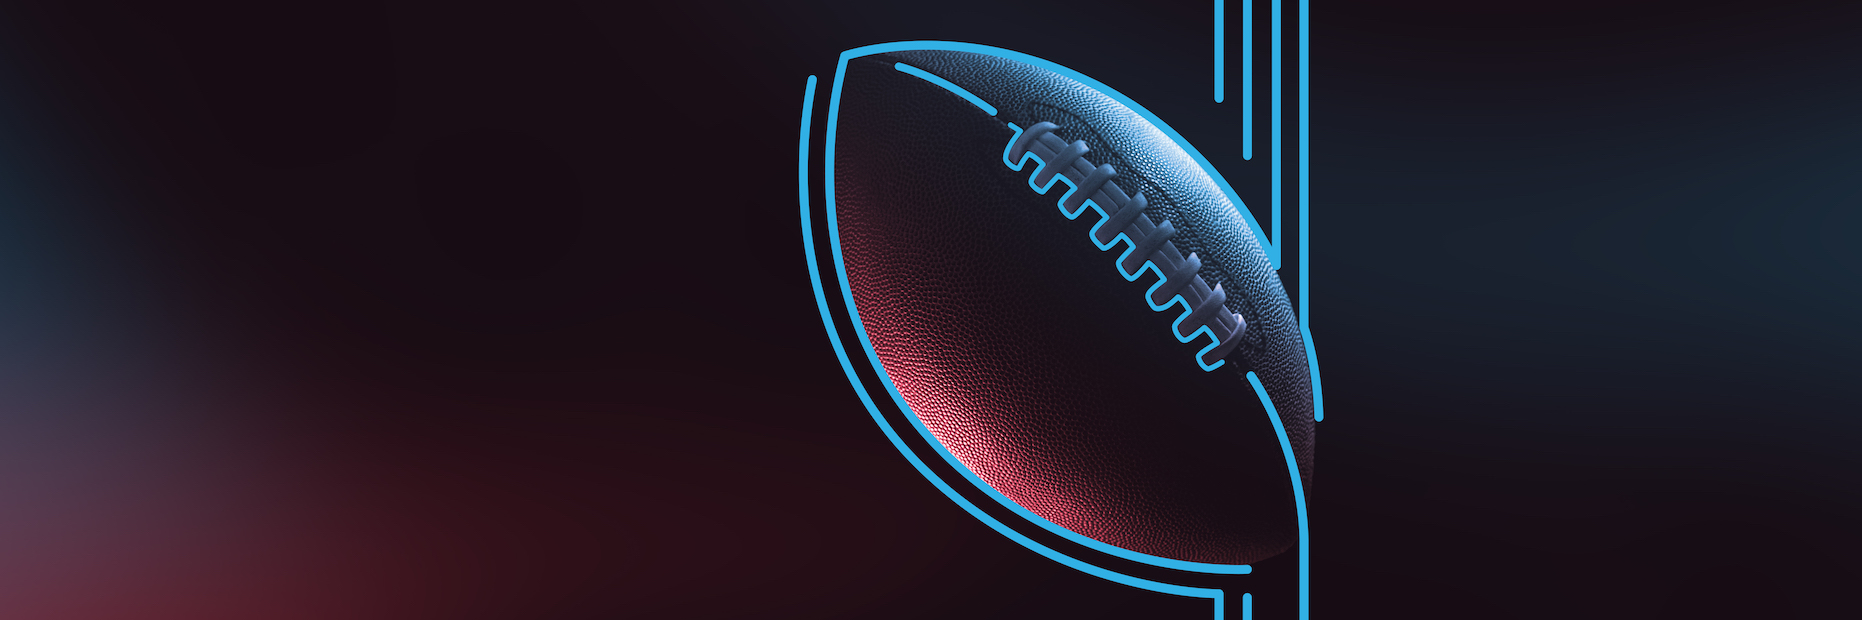 Brand Bowl 2021 Ad Tracker: Hellmann’s